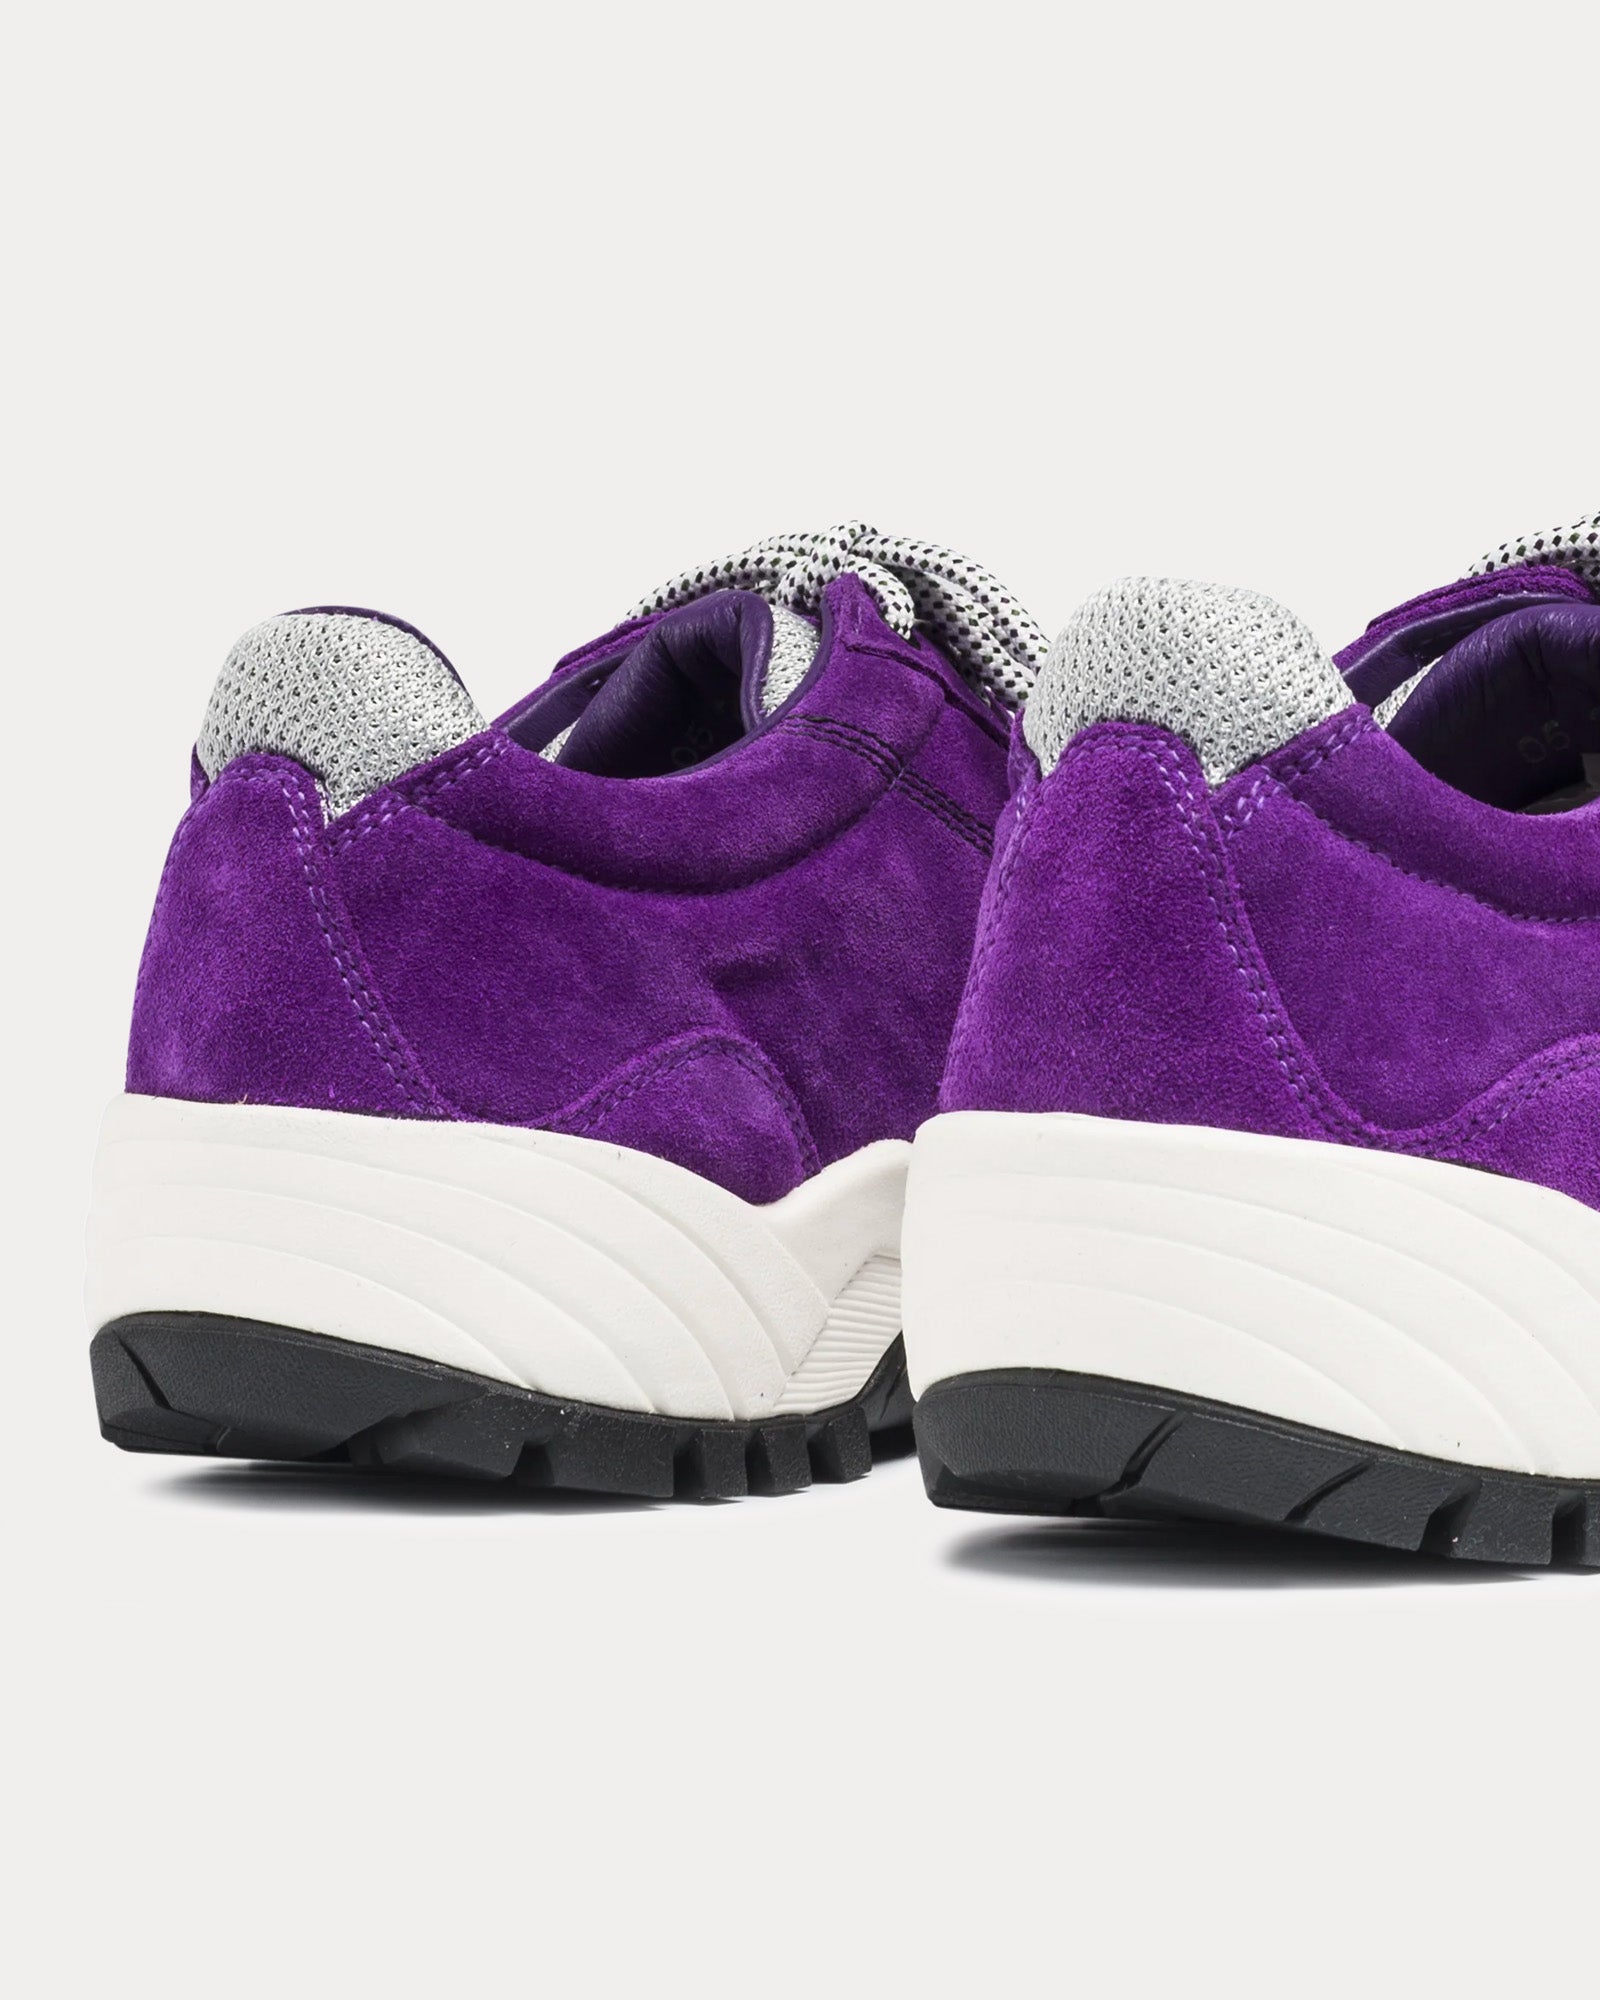 Diemme - Movida Suede Purple Low Top Sneakers